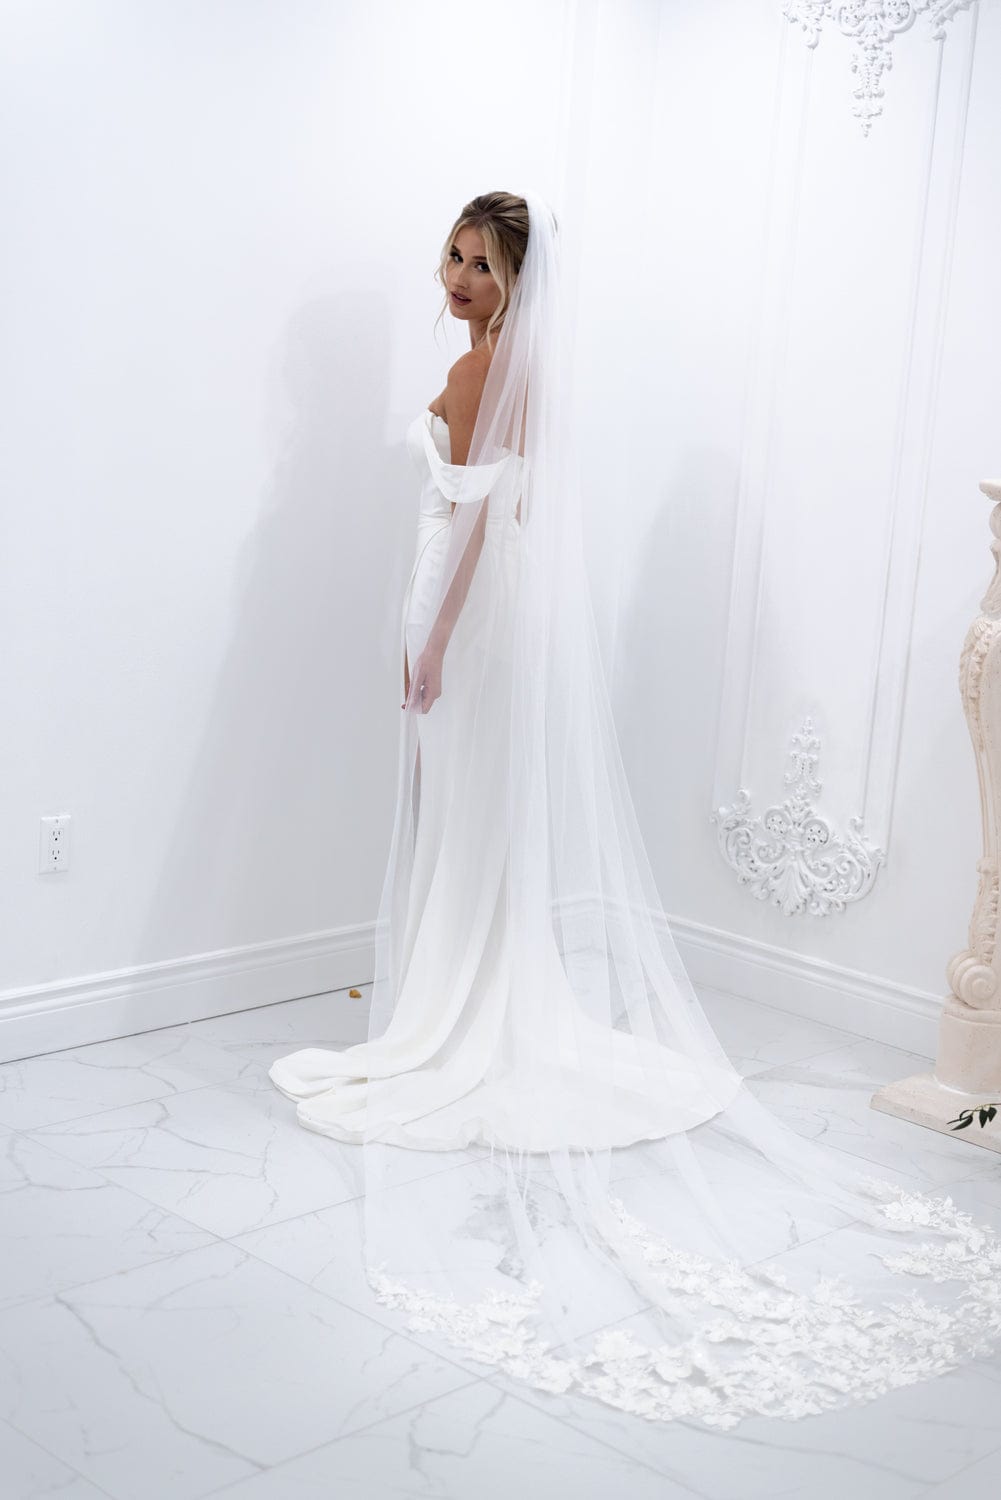 Chic Bridals Bridal Veils Ivory / 3x3.5 "Royal" Dulce Veil Wedding Gowns